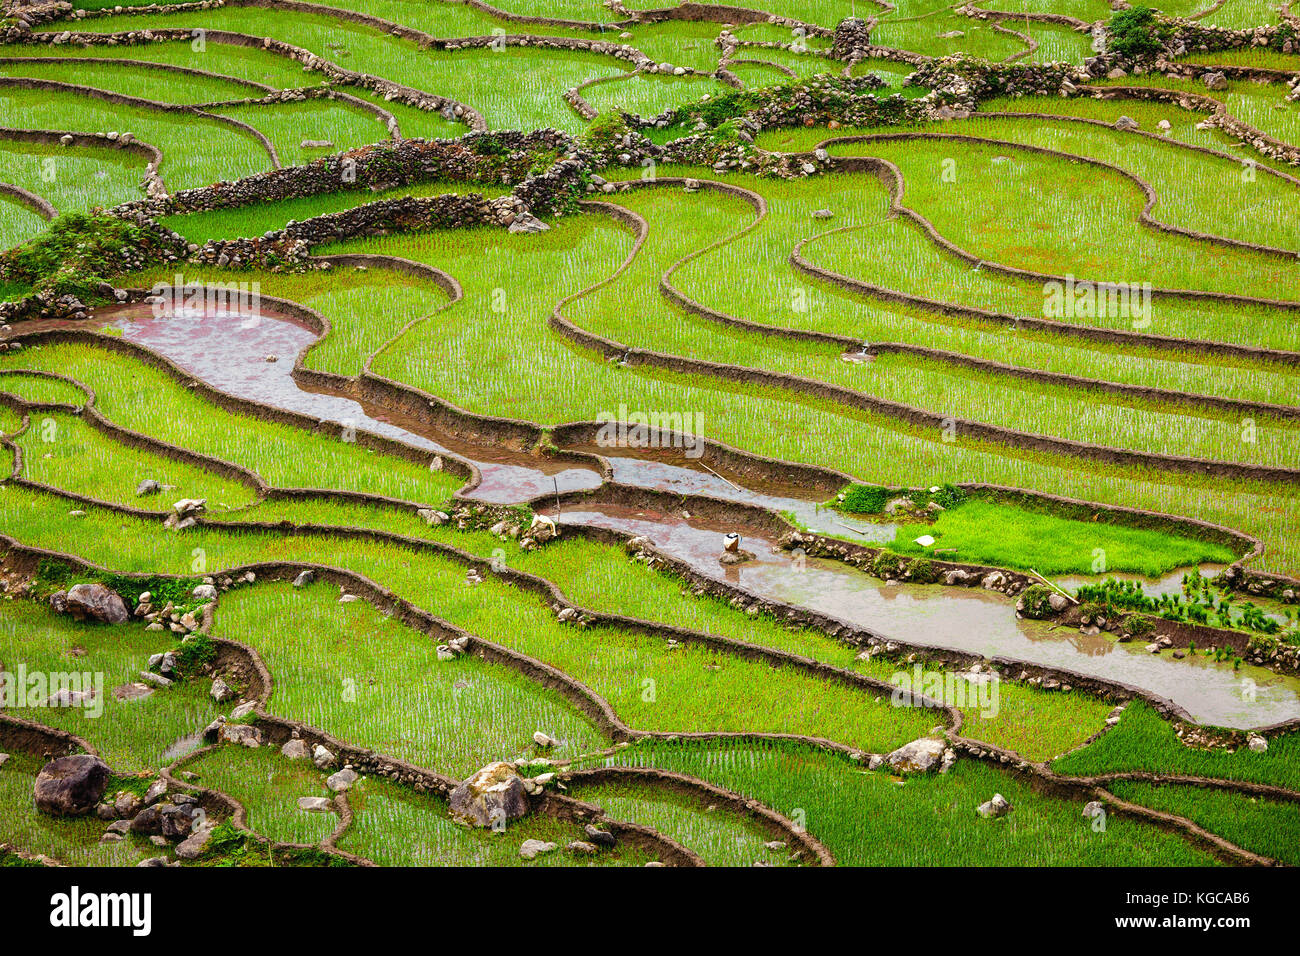 Rice field terraces, Vietnam Stock Photo